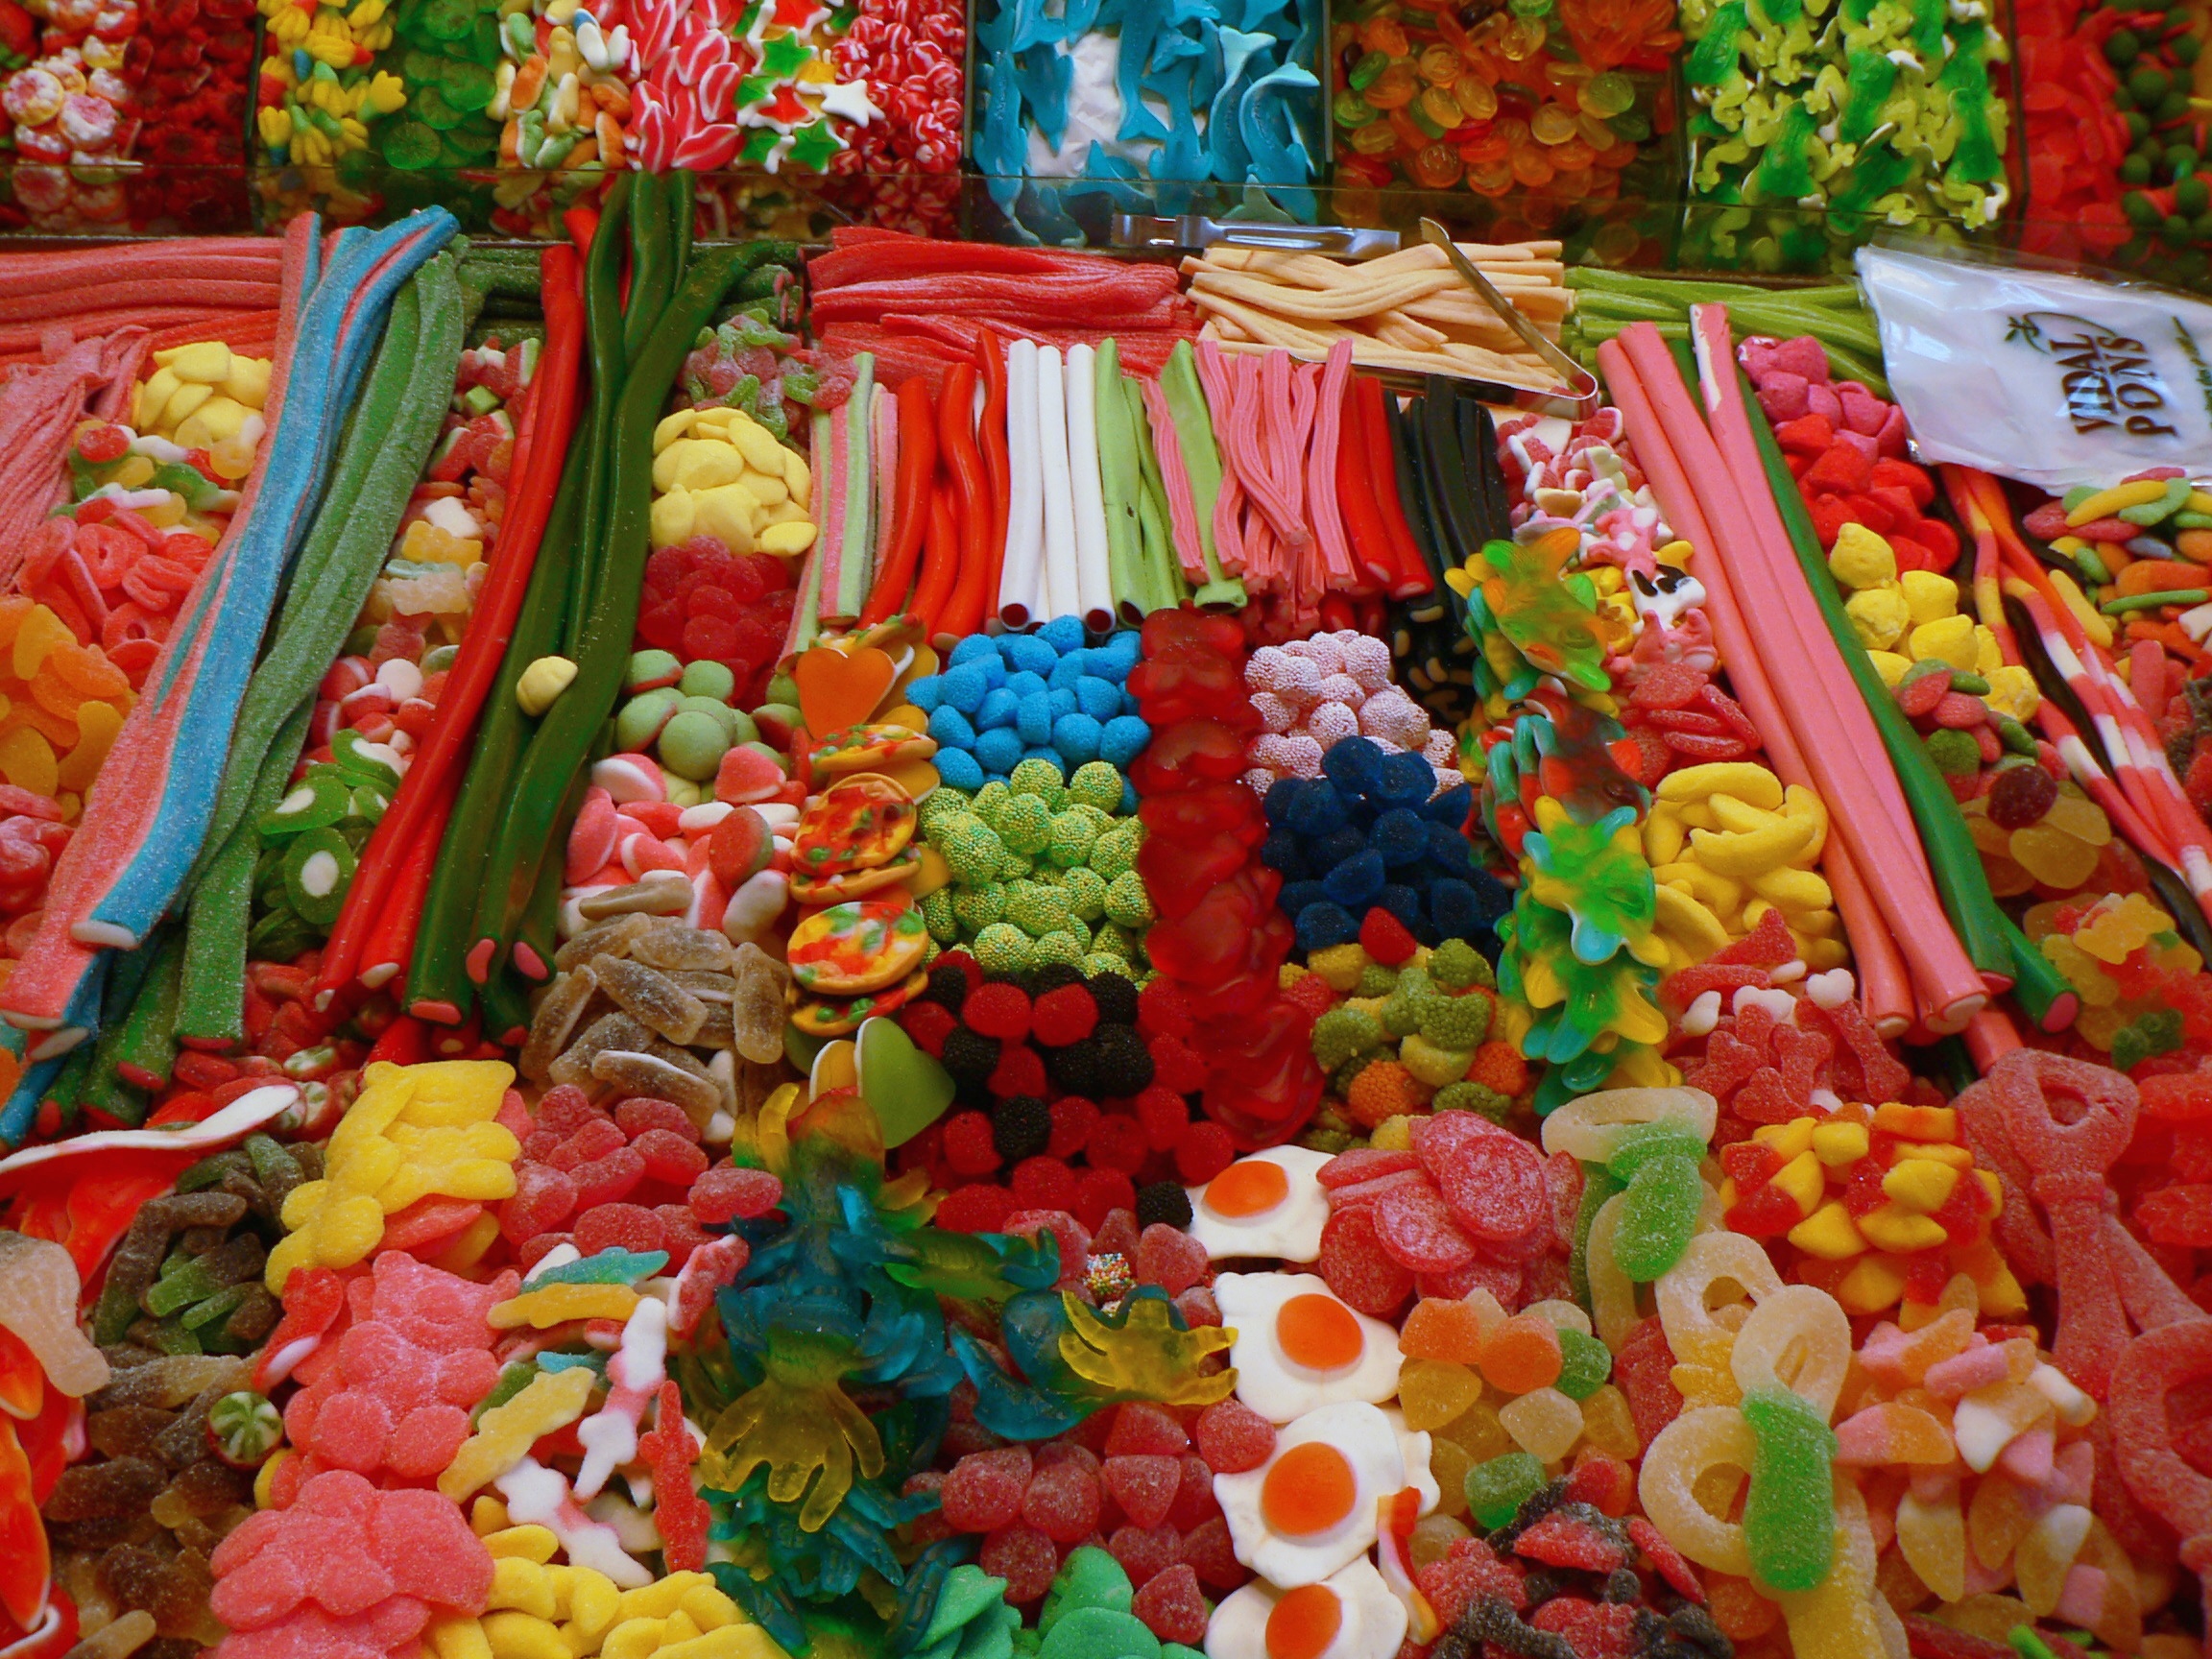 Gummy candy - Wikipedia